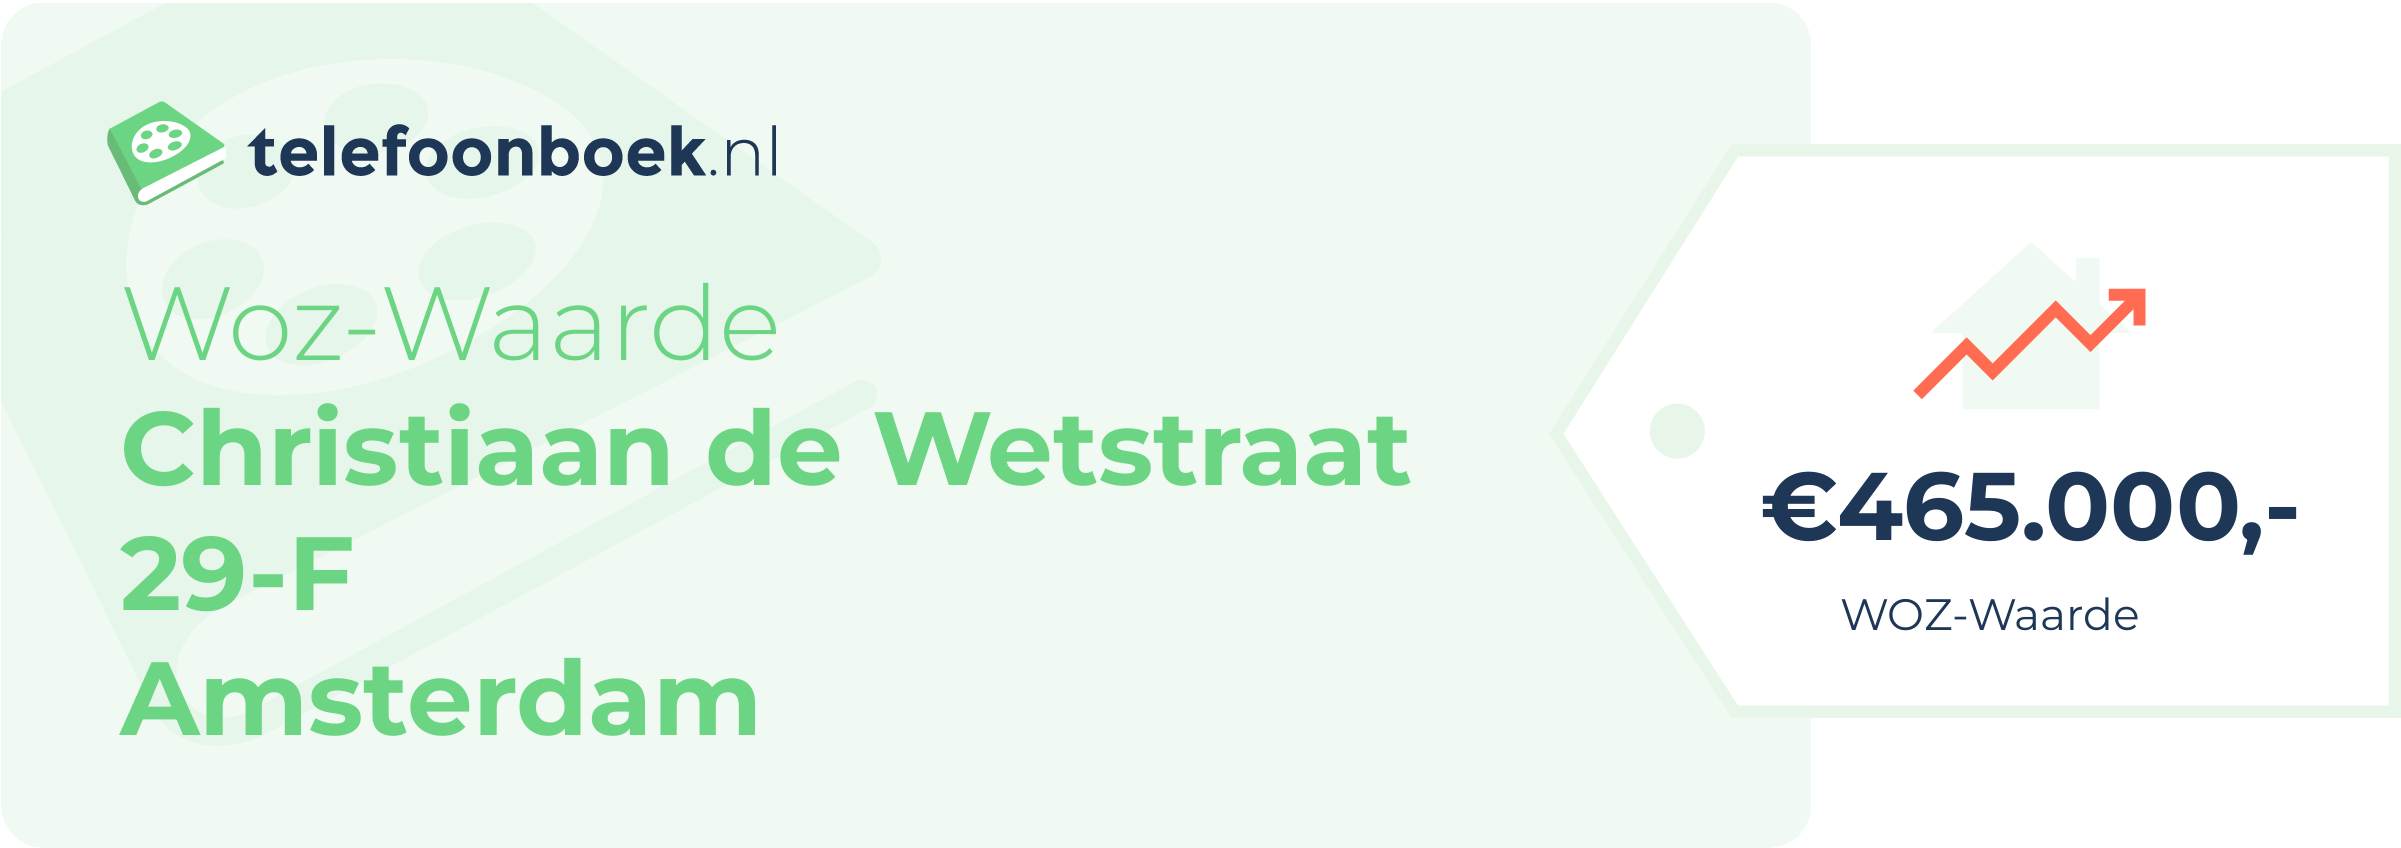 WOZ-waarde Christiaan De Wetstraat 29-F Amsterdam